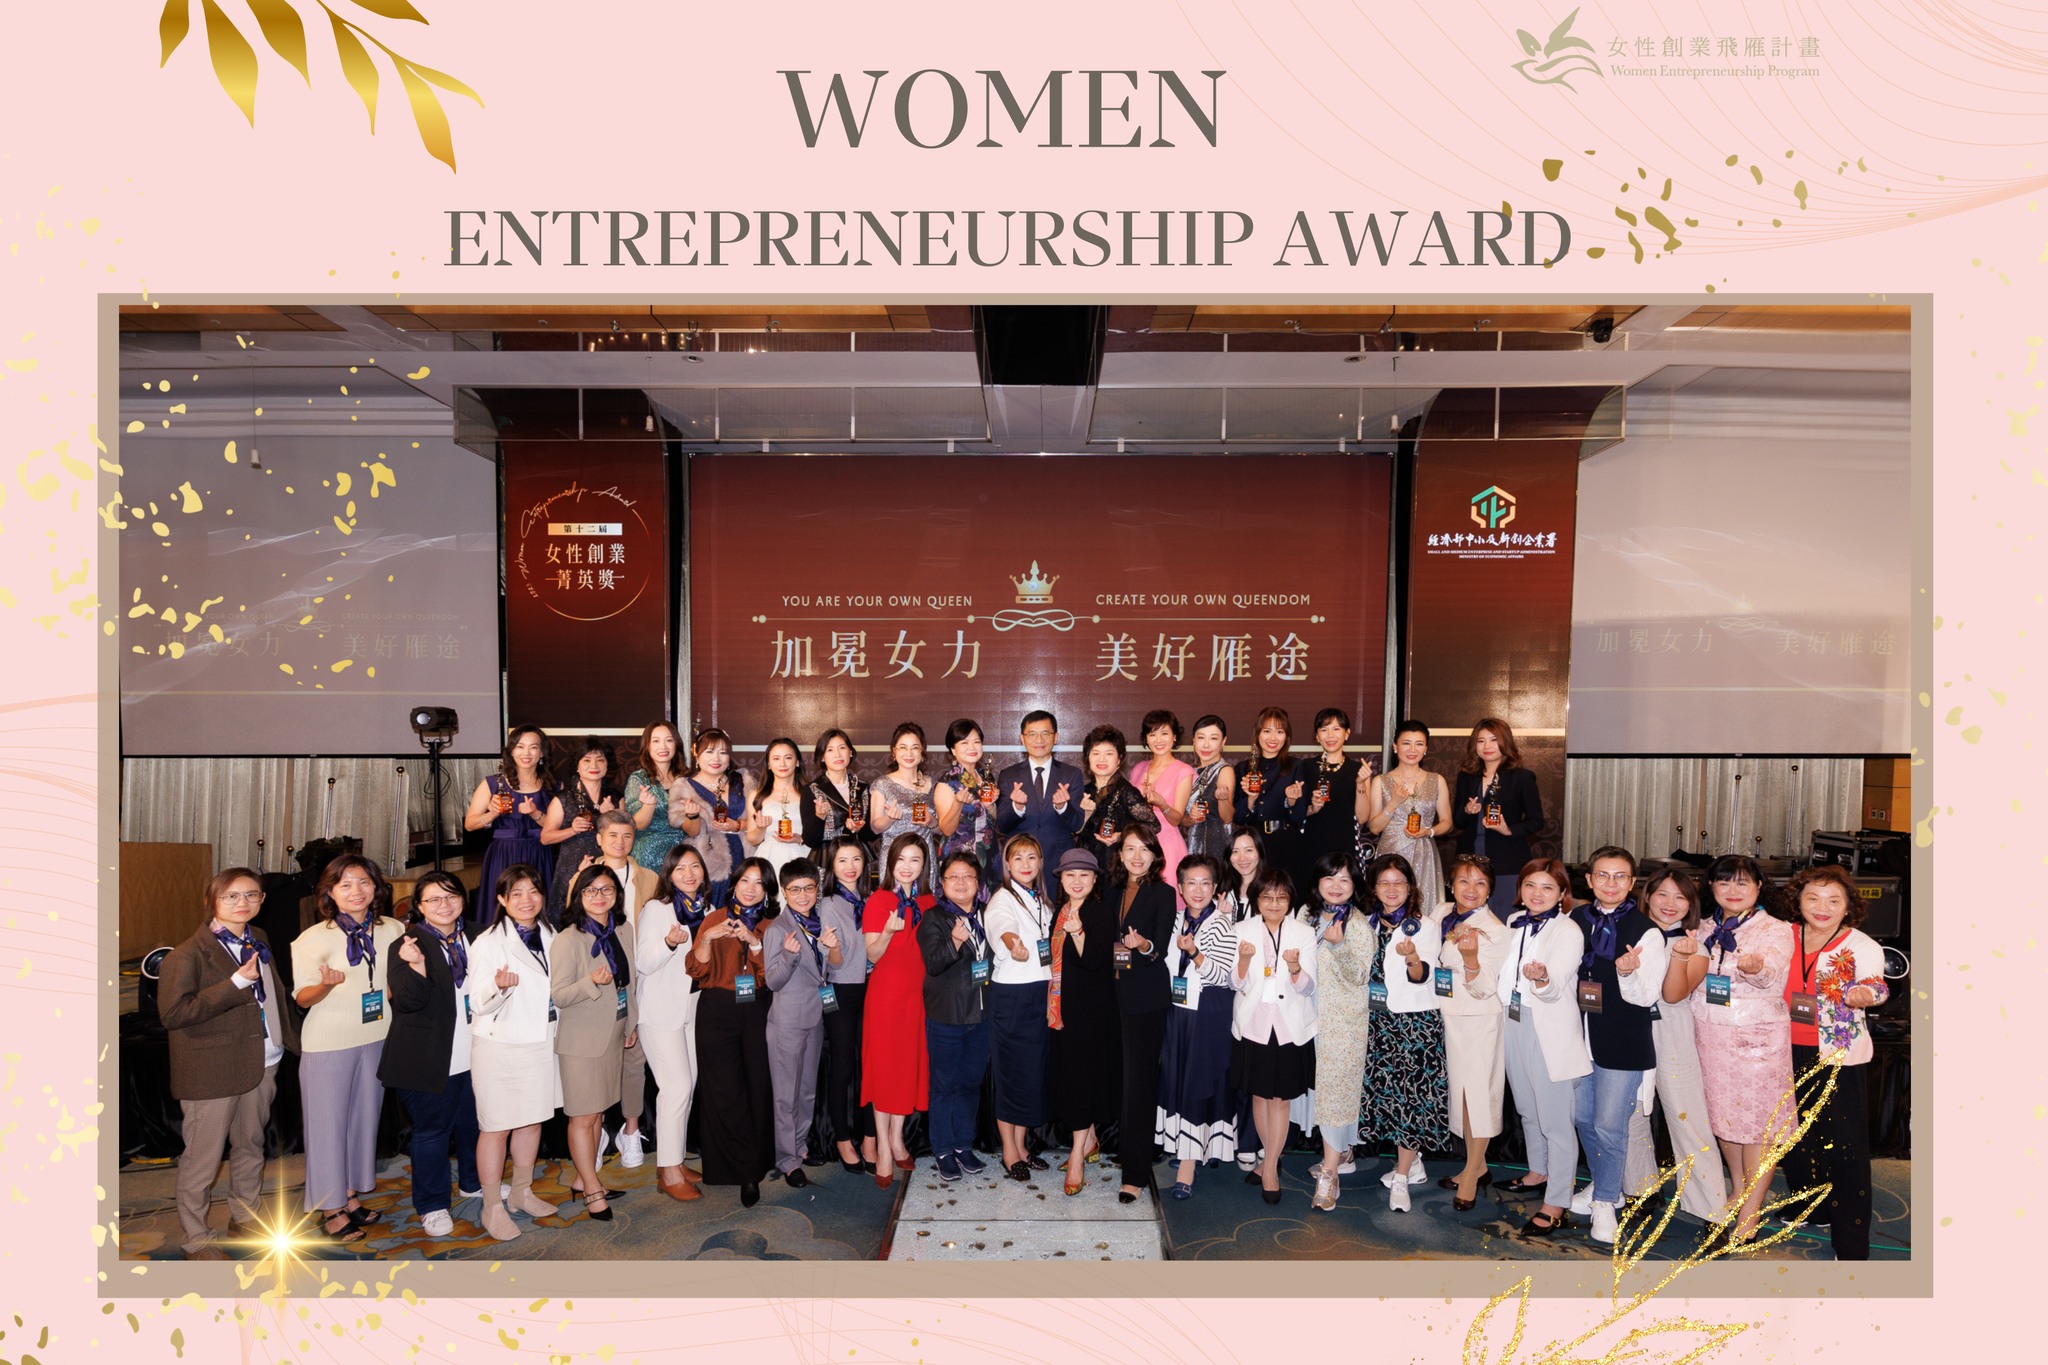 The Women Entrepreneurs Award is open for Application NOW!